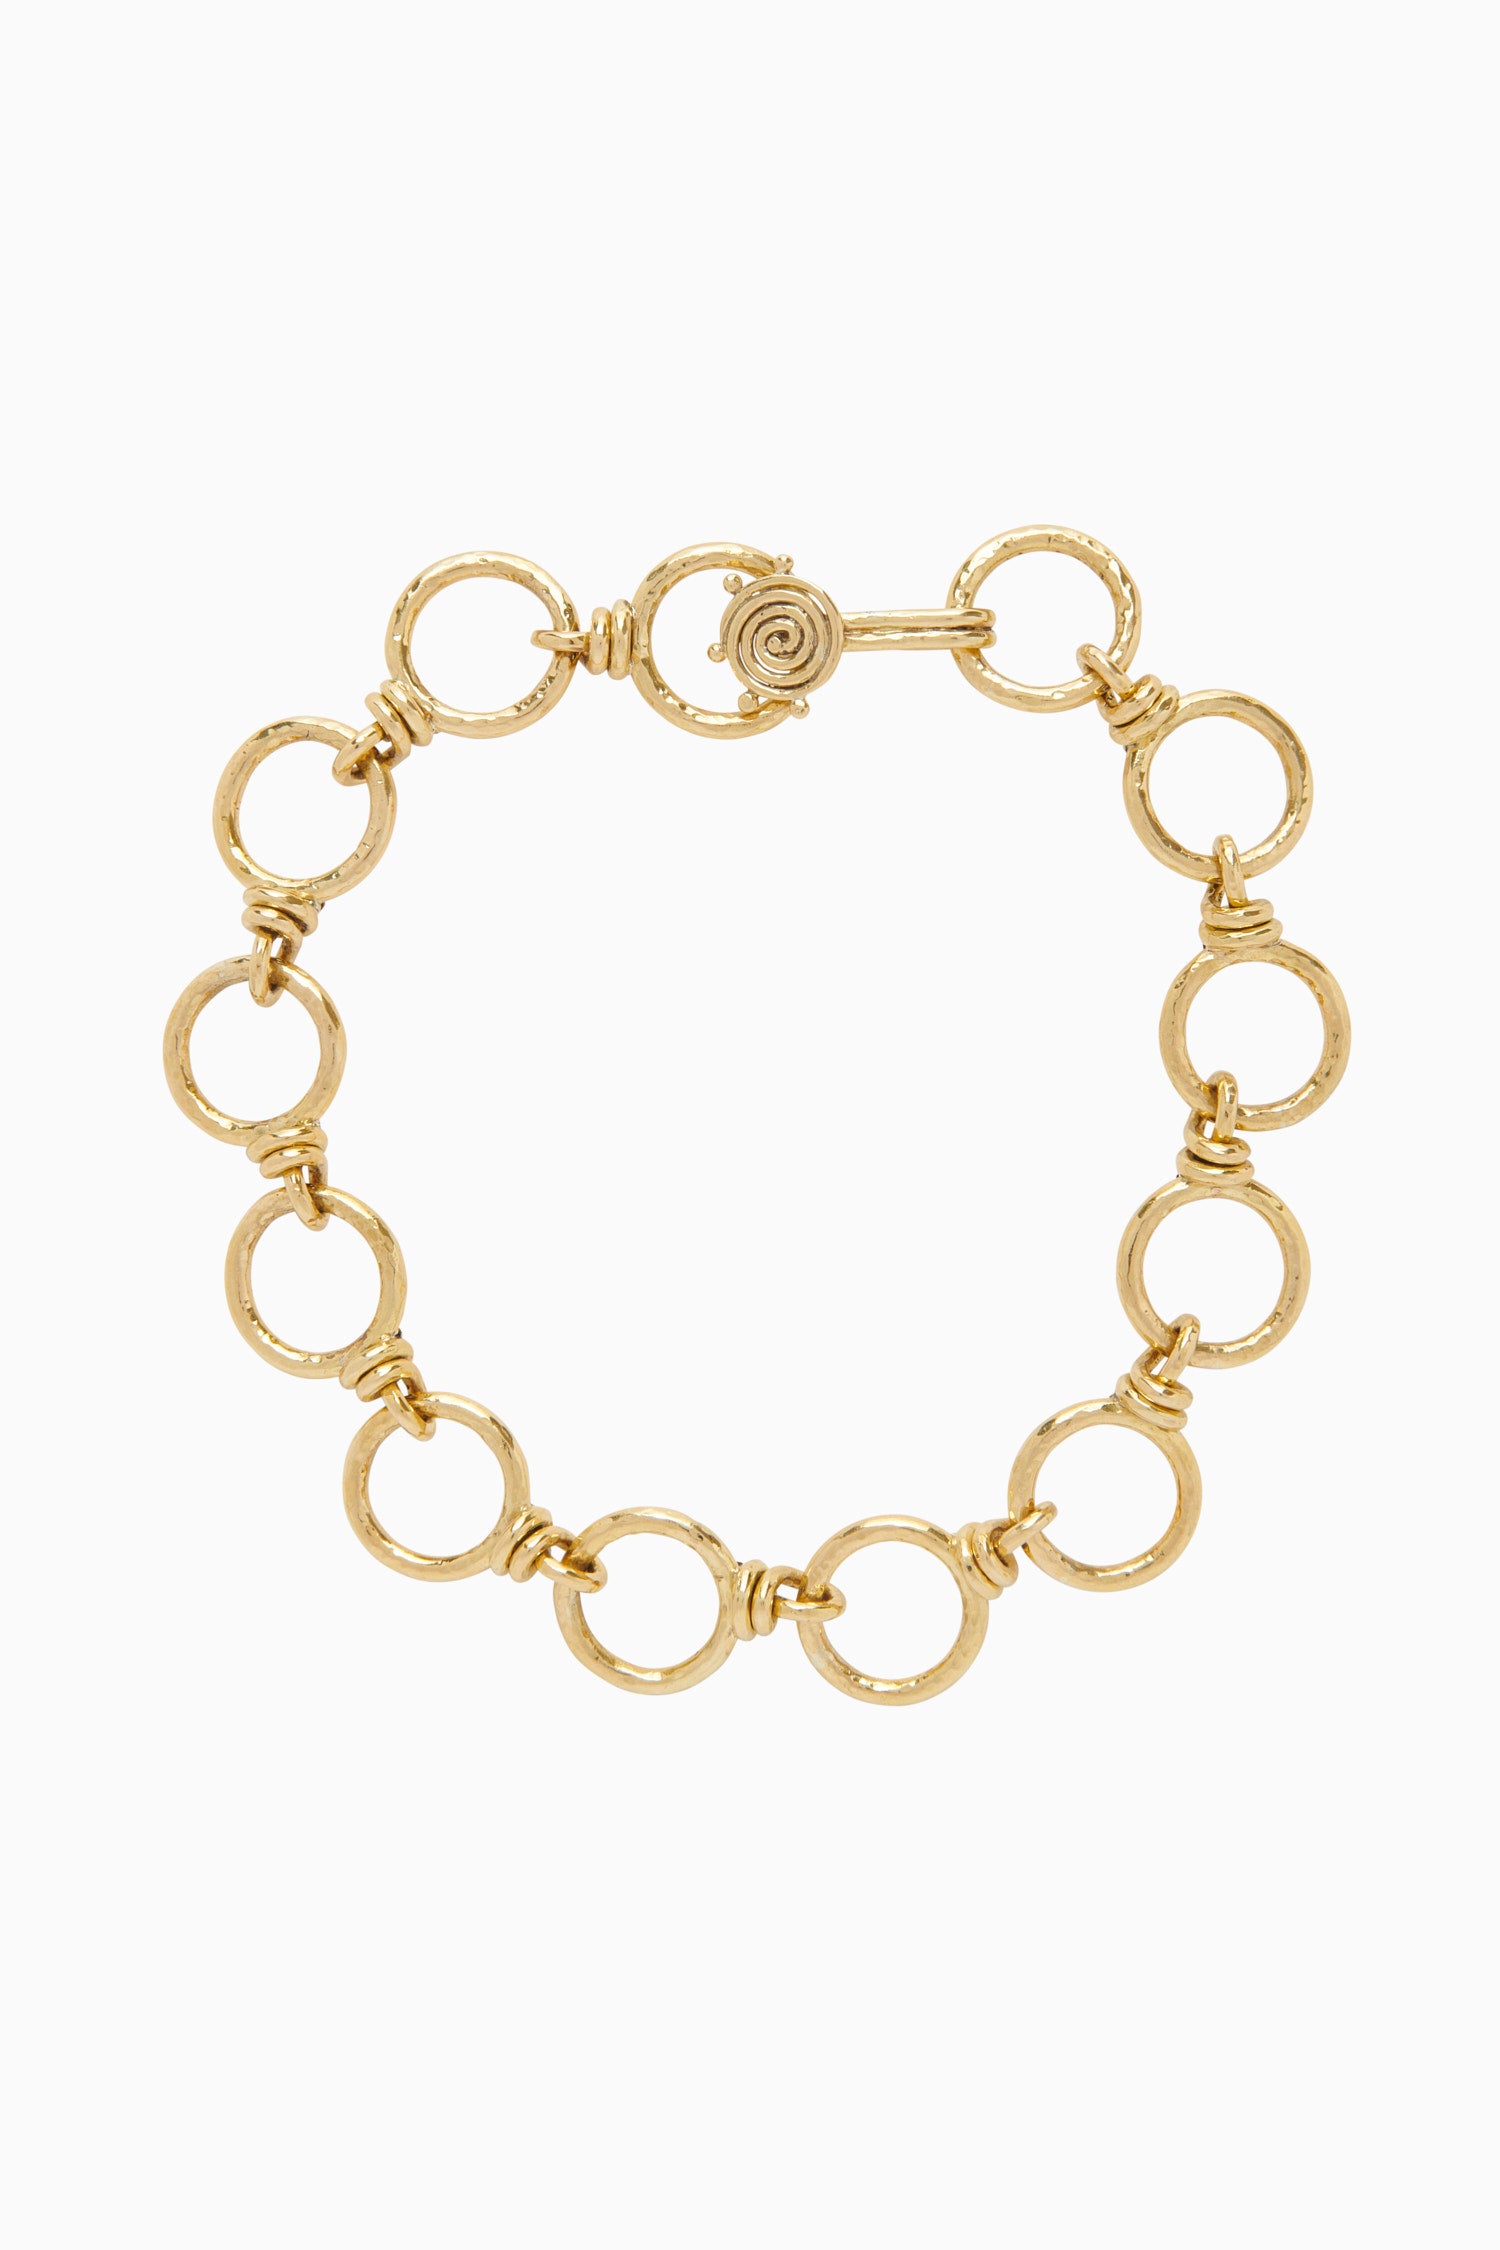 Ulla Johnson Hammered Circle Chain Necklace - Brass